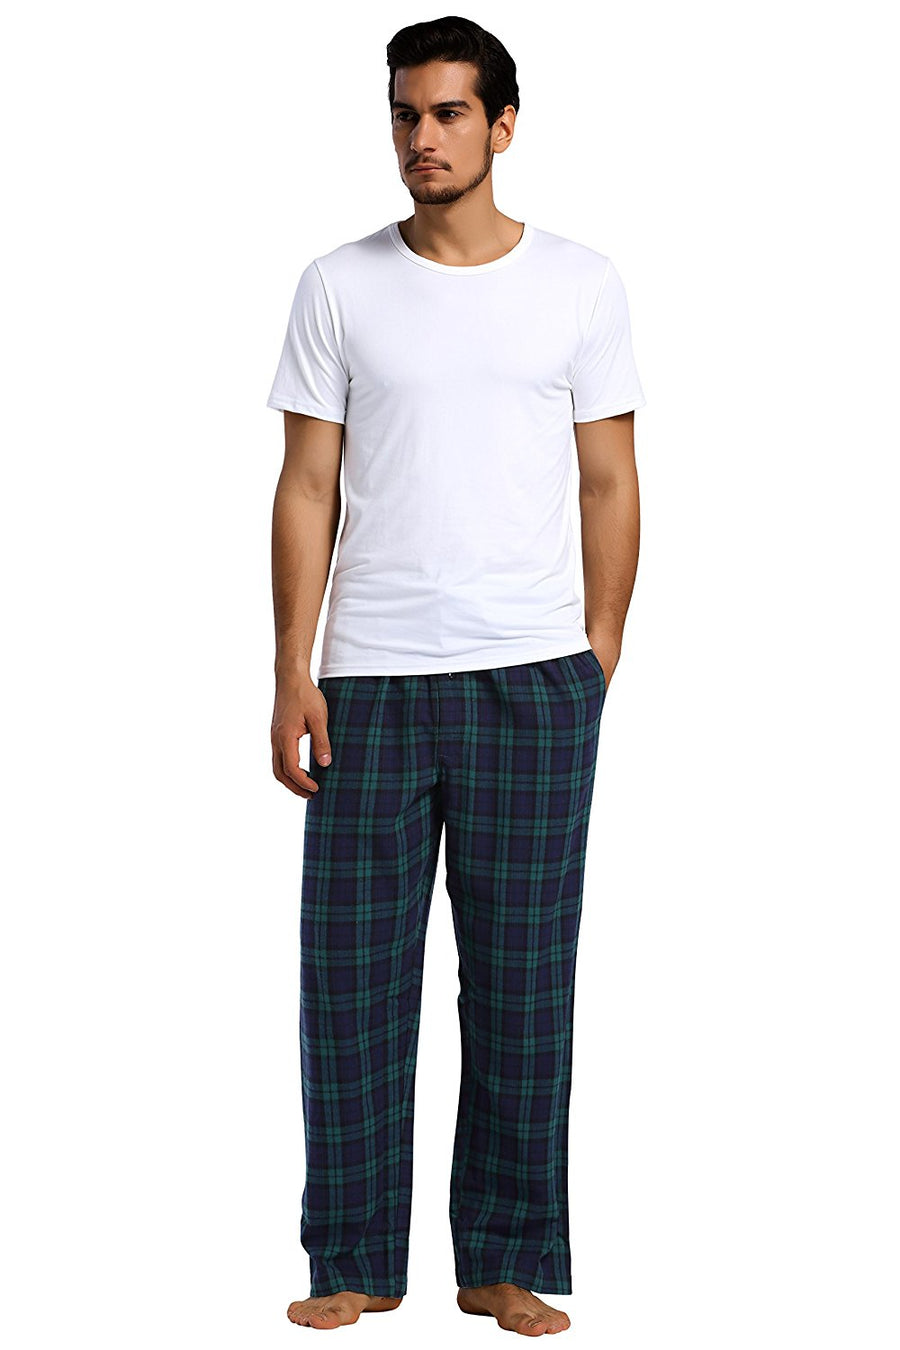 YINCOZI Men's 100% Cotton Super Soft Flannel Pajama Pants, Black